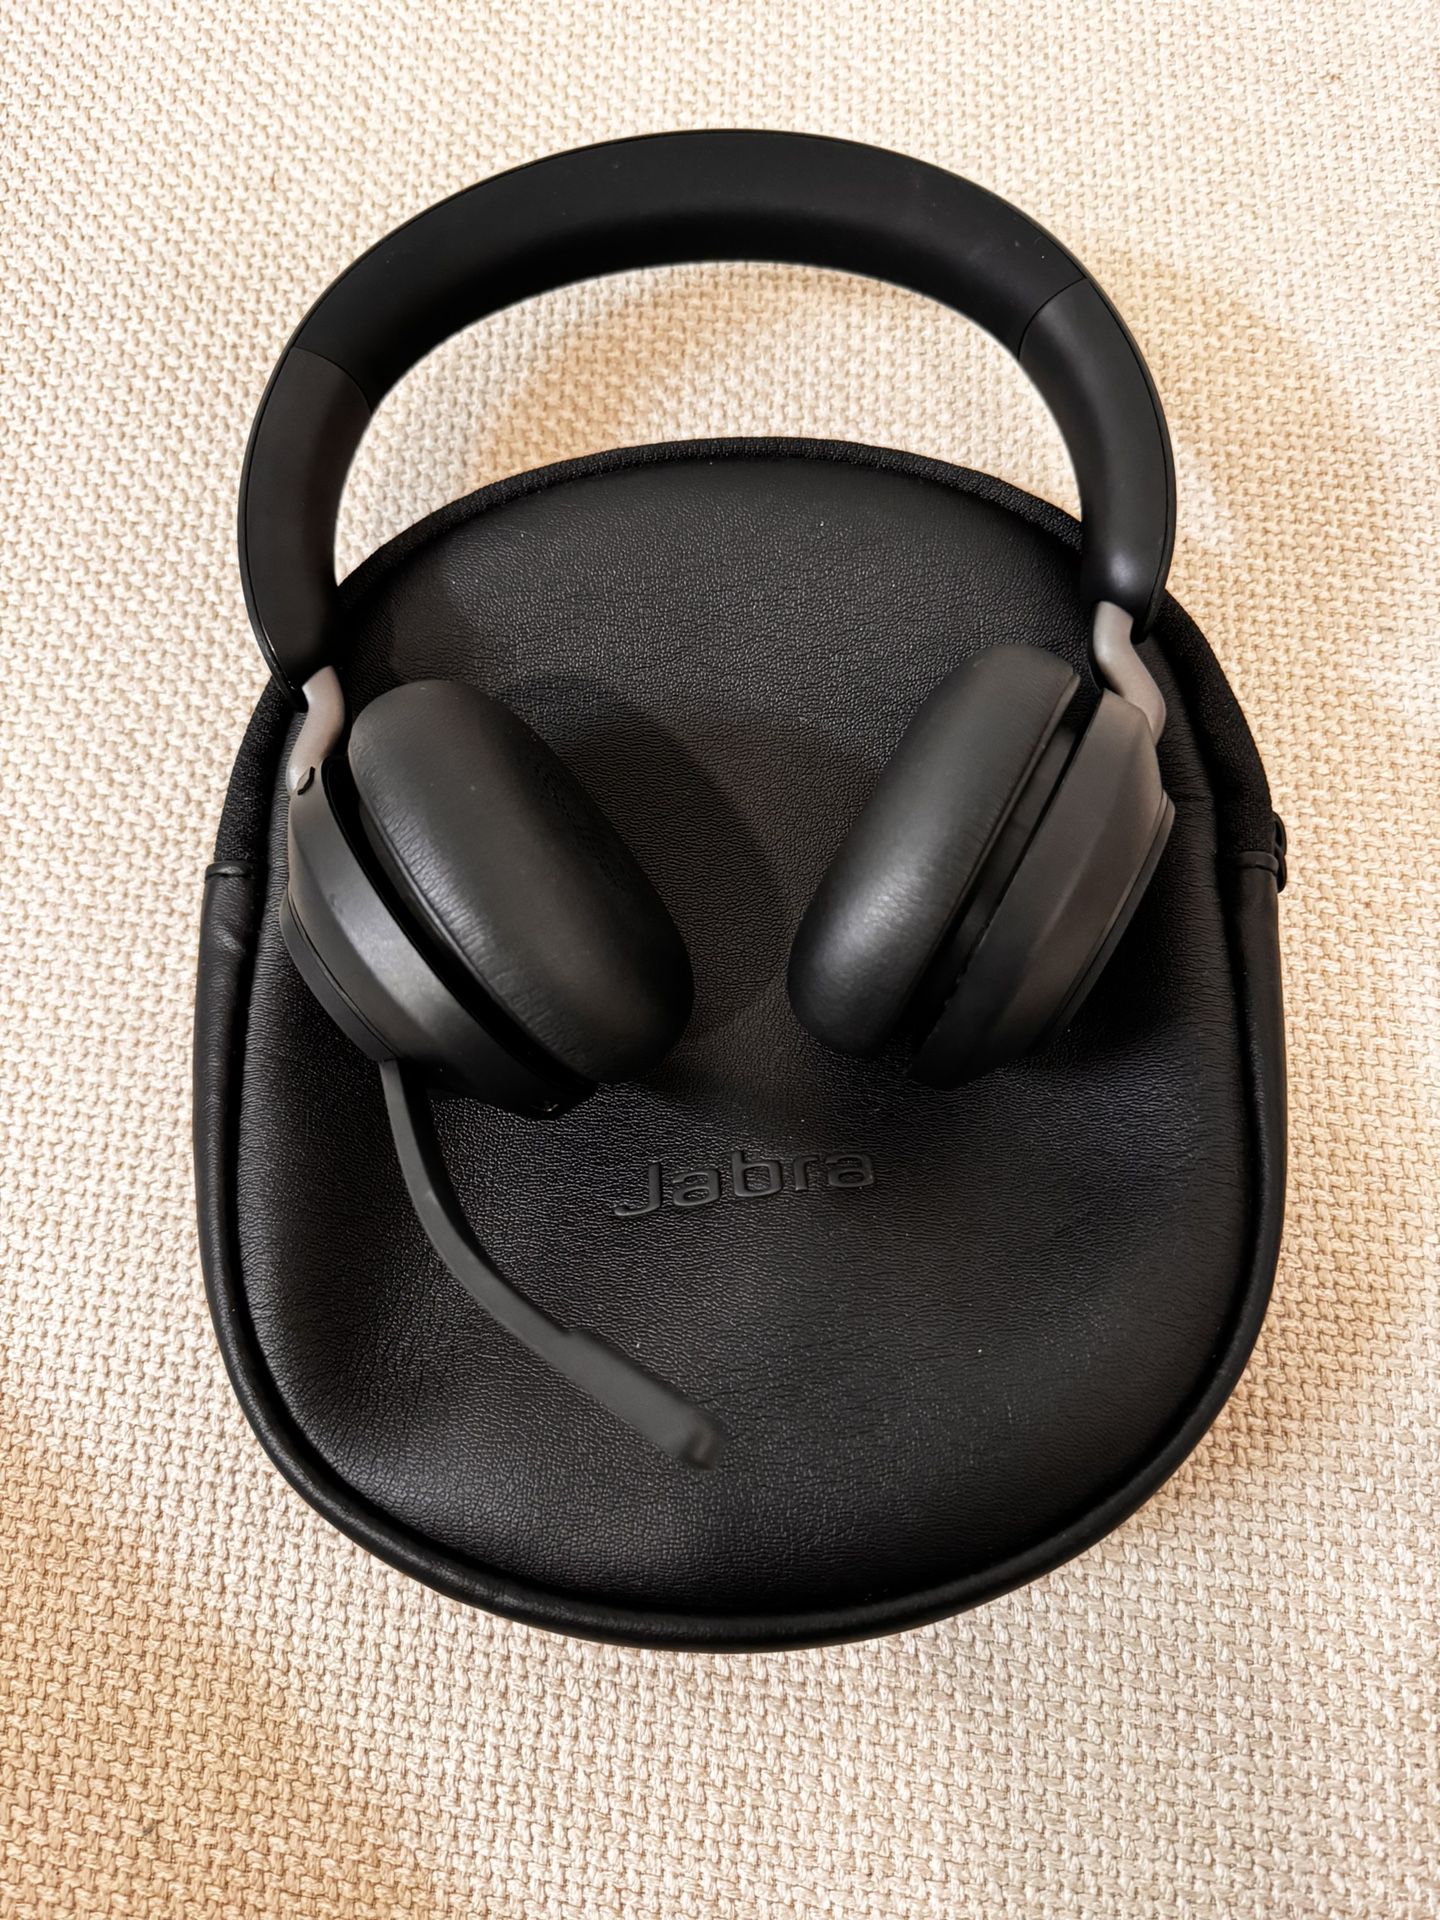 New Jabra Headset Bluetooth